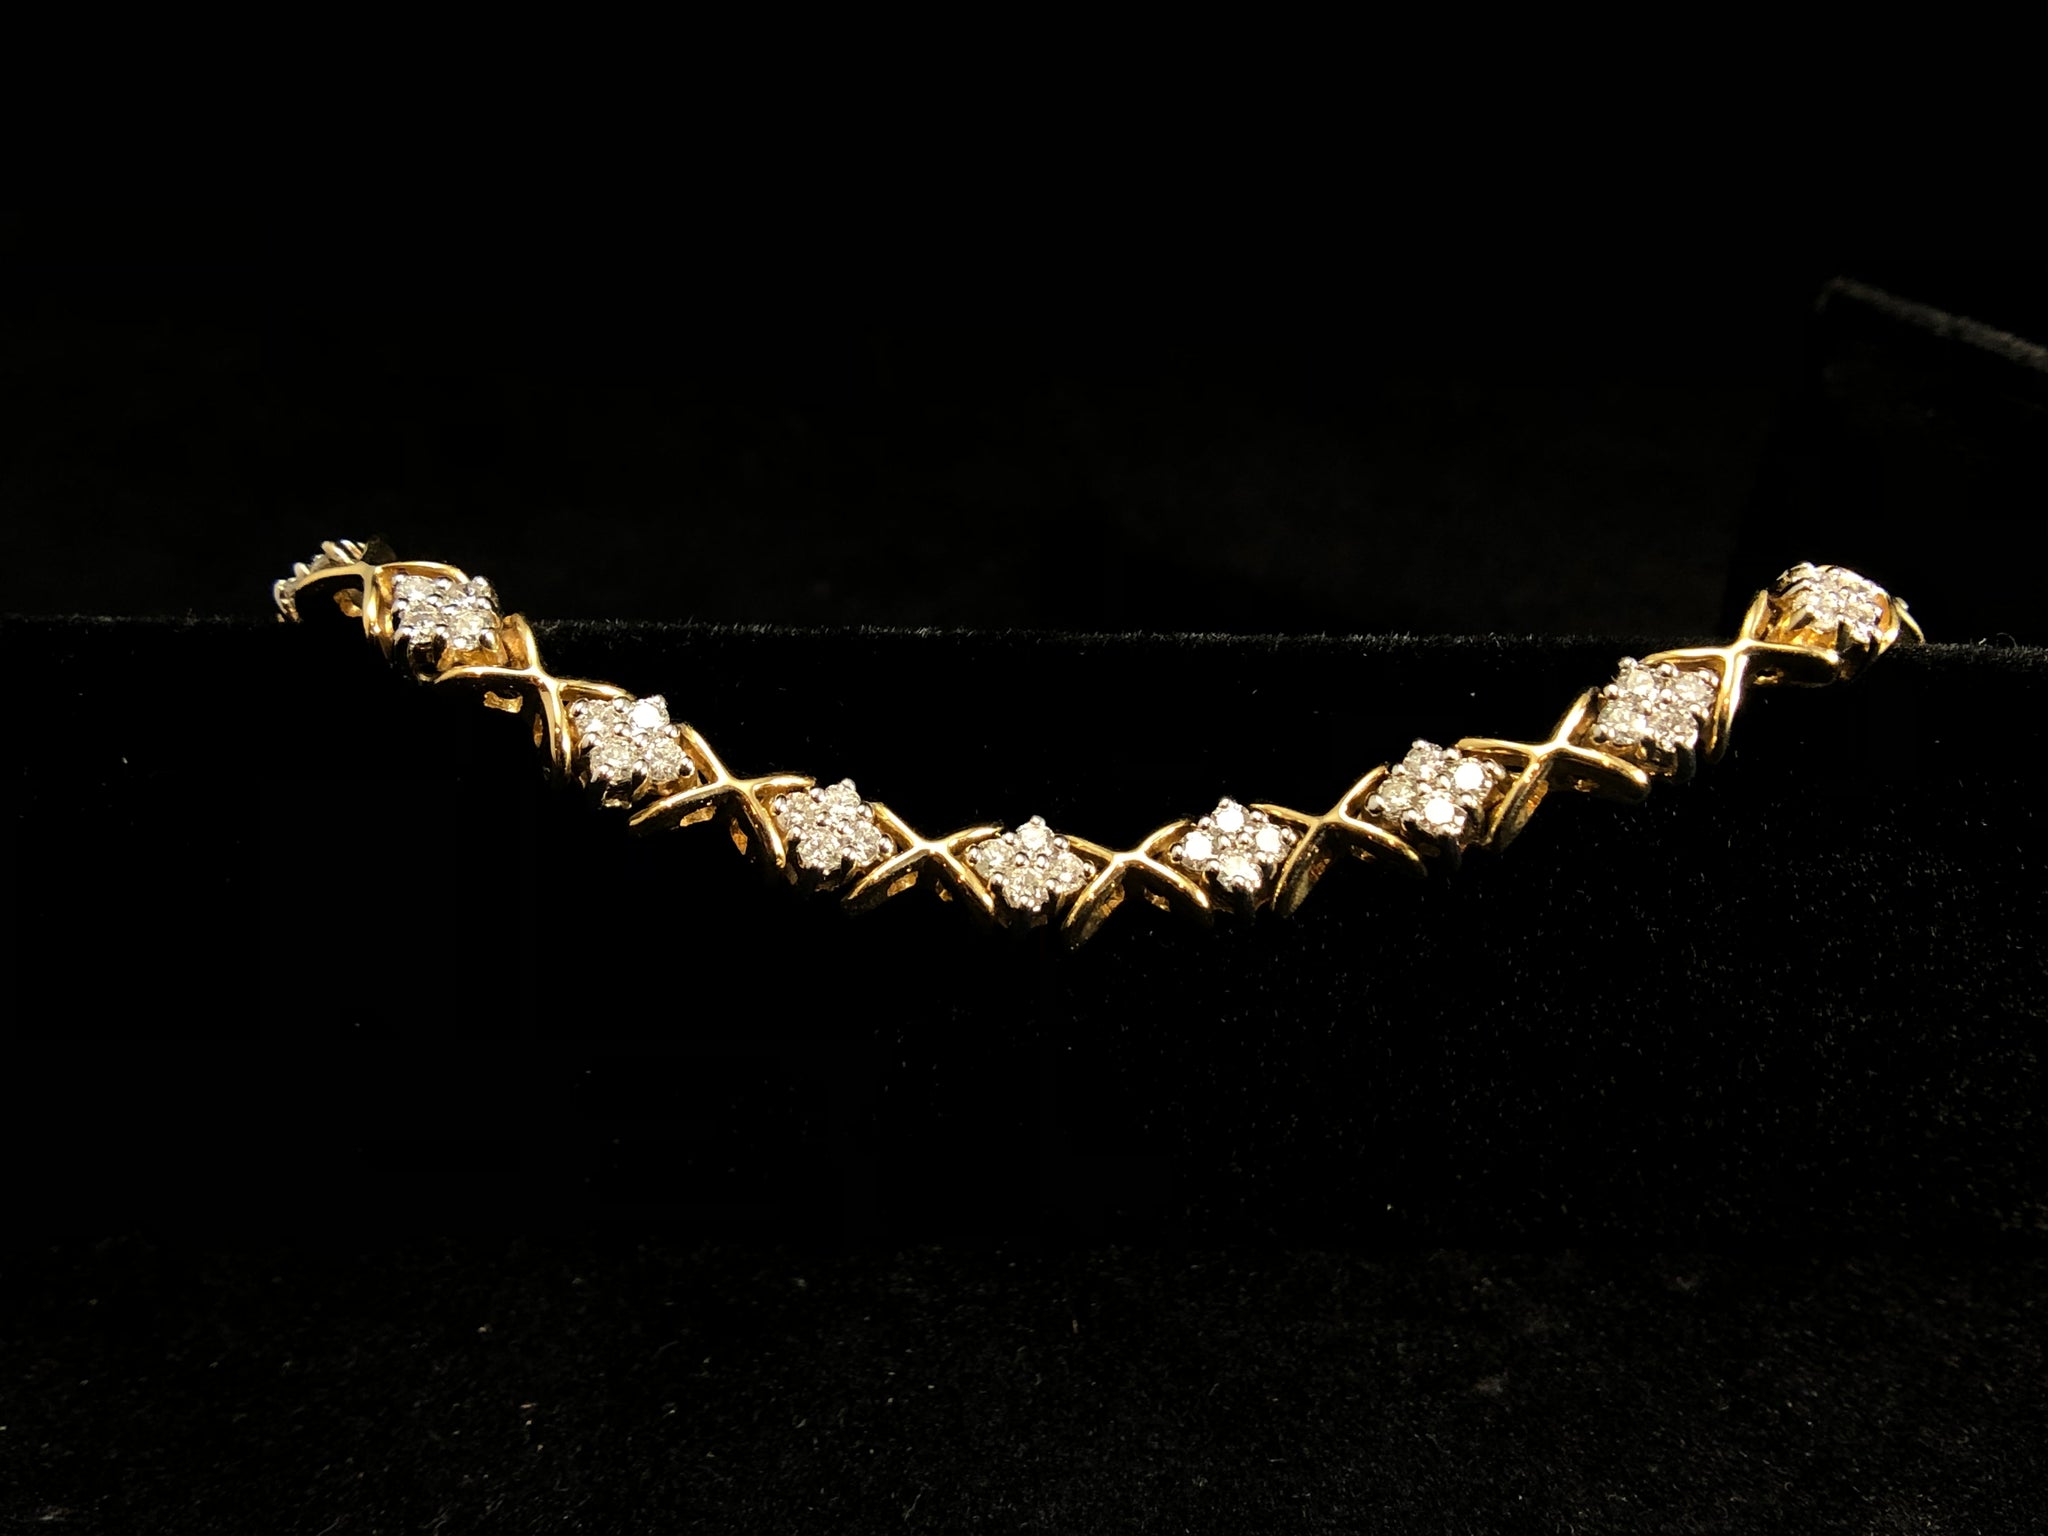 Diamond XOXO Bracelet 2.06 Diamond Carats 14KT Gold